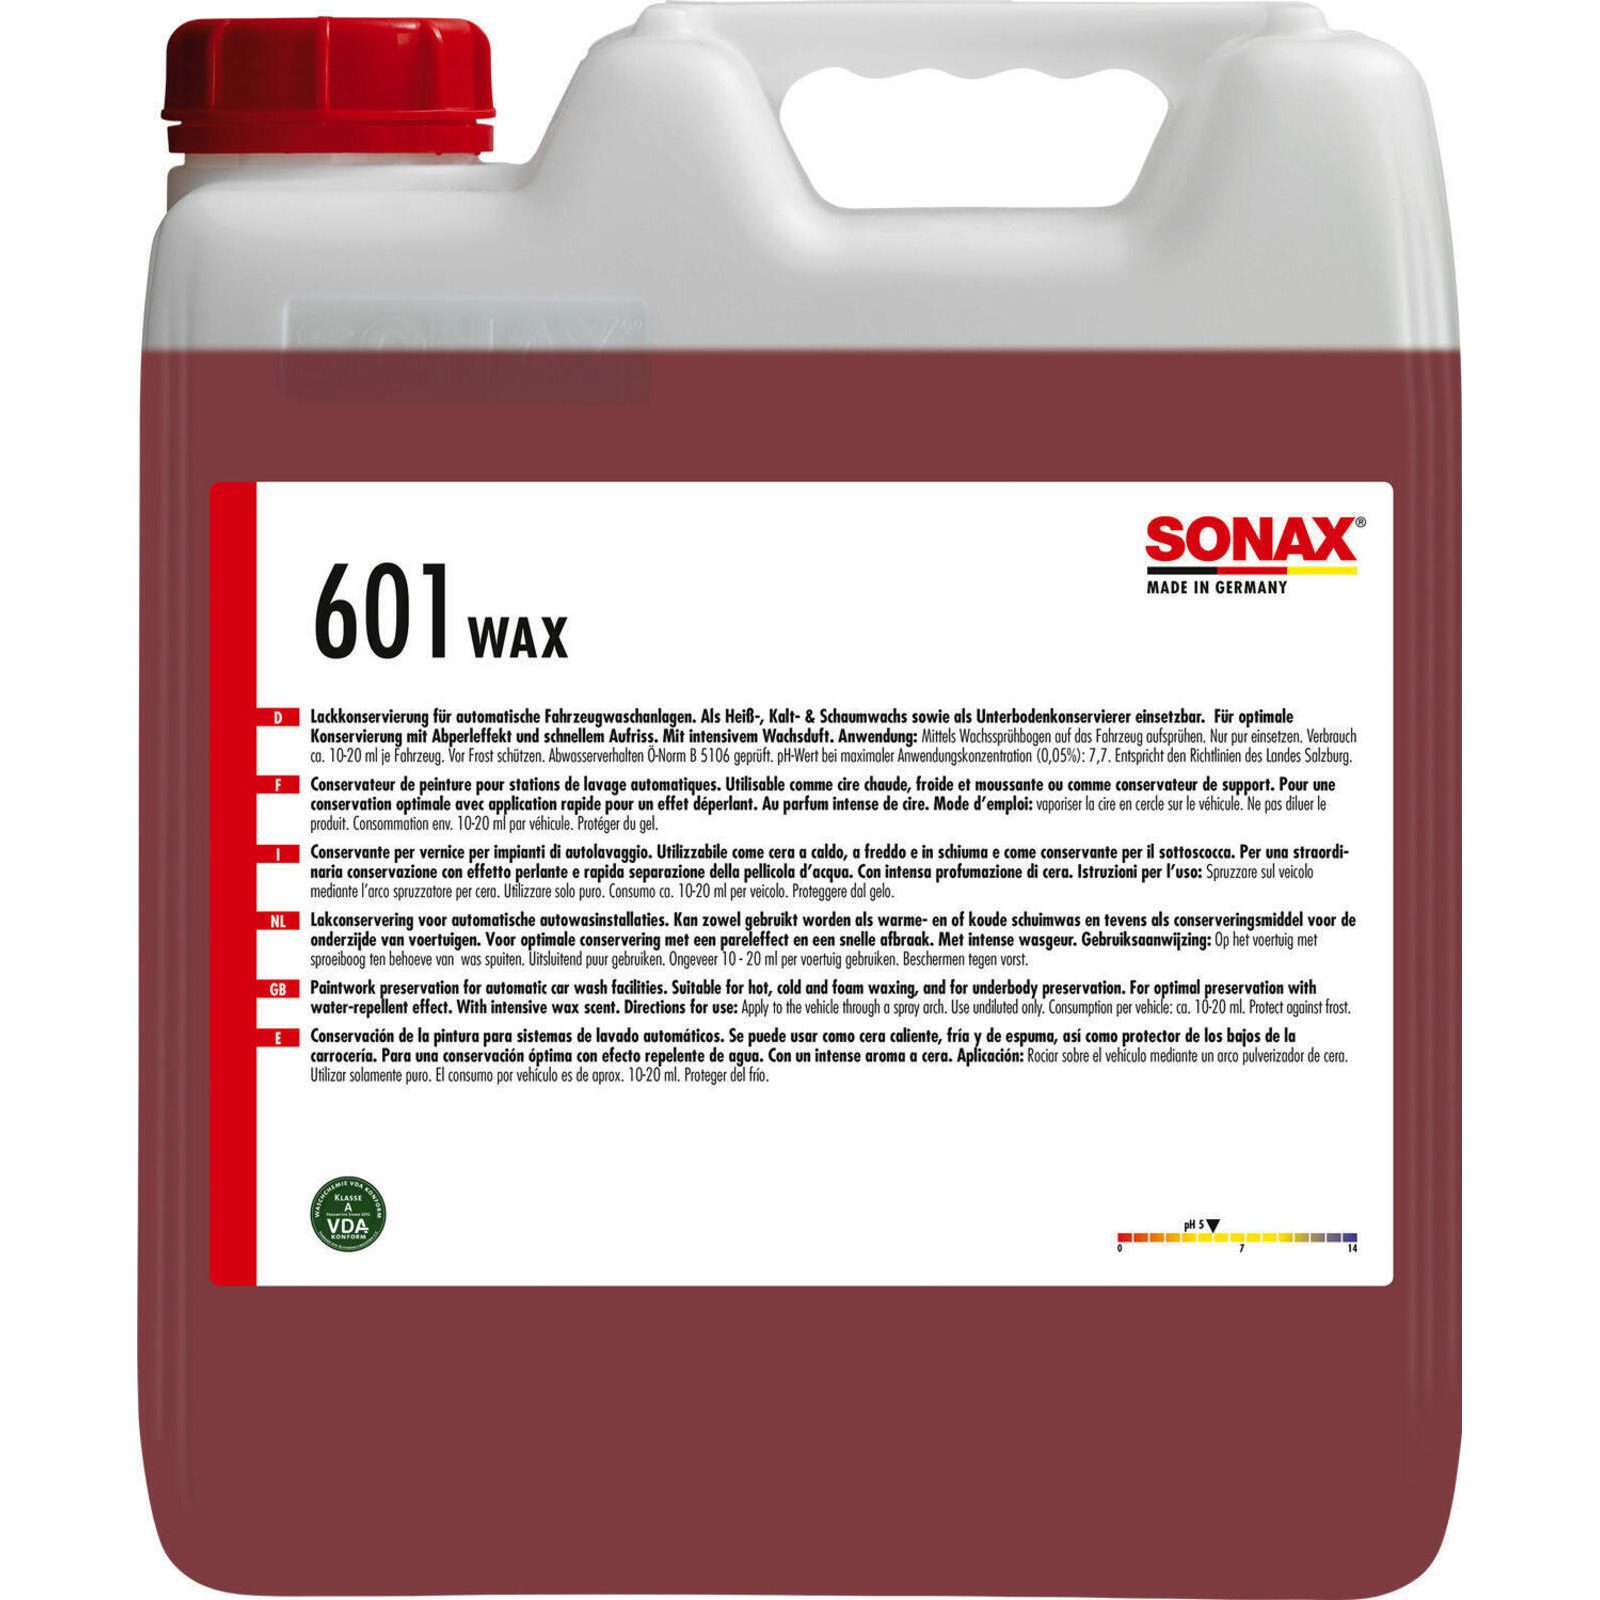 SONAX Conservation Wax Brilliant wax with wax fragrance Limit